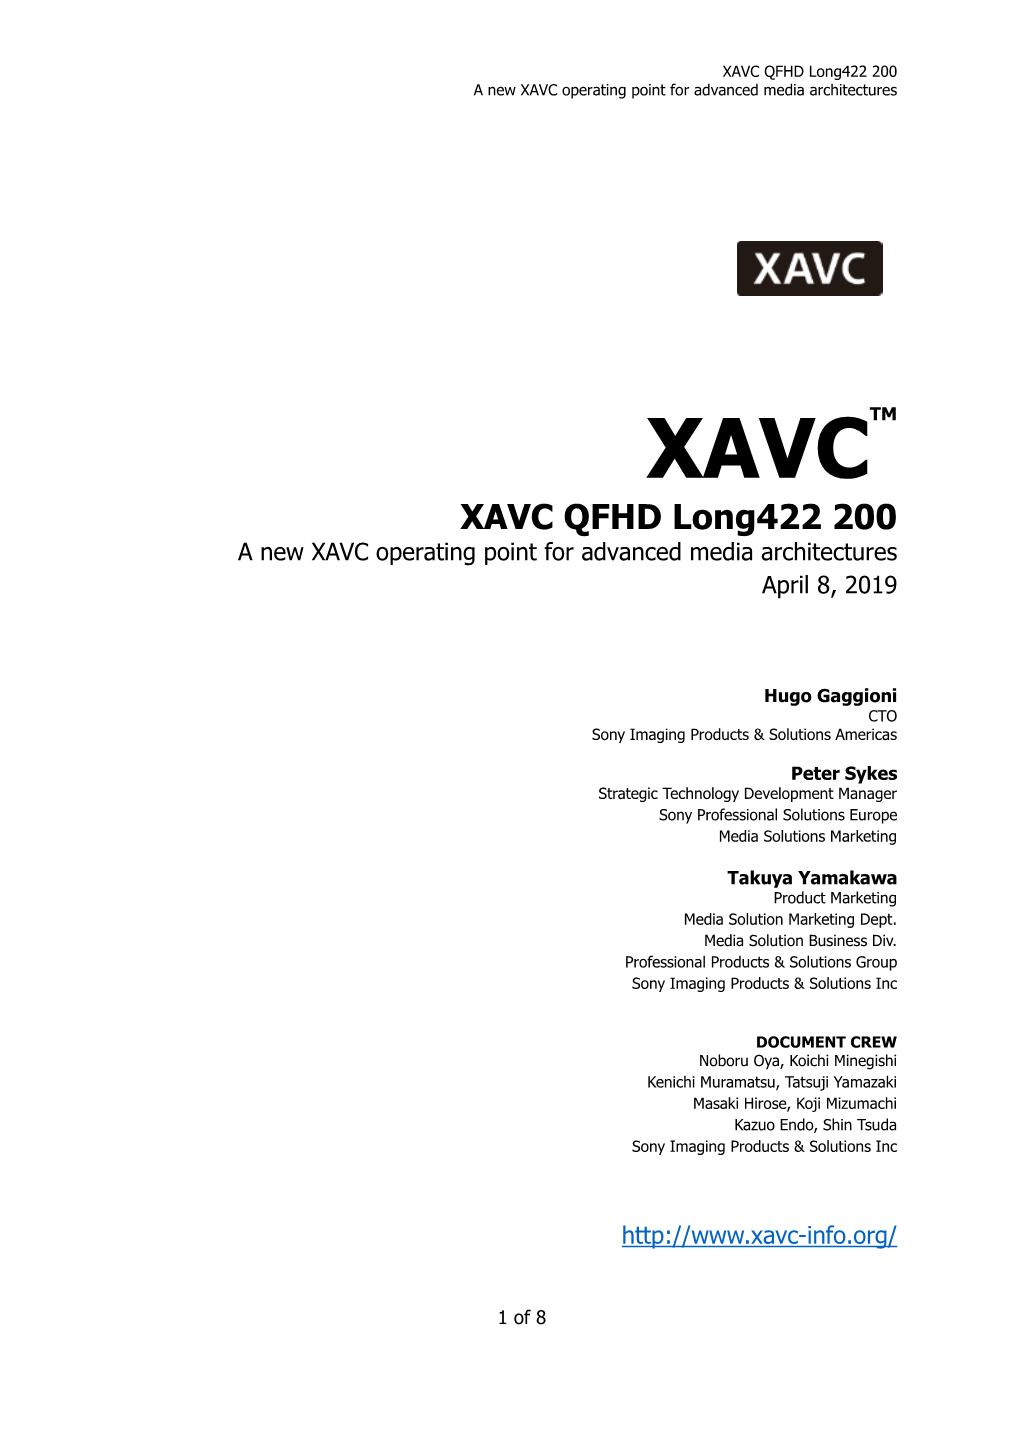 XAVCTM XAVC QFHD Long422